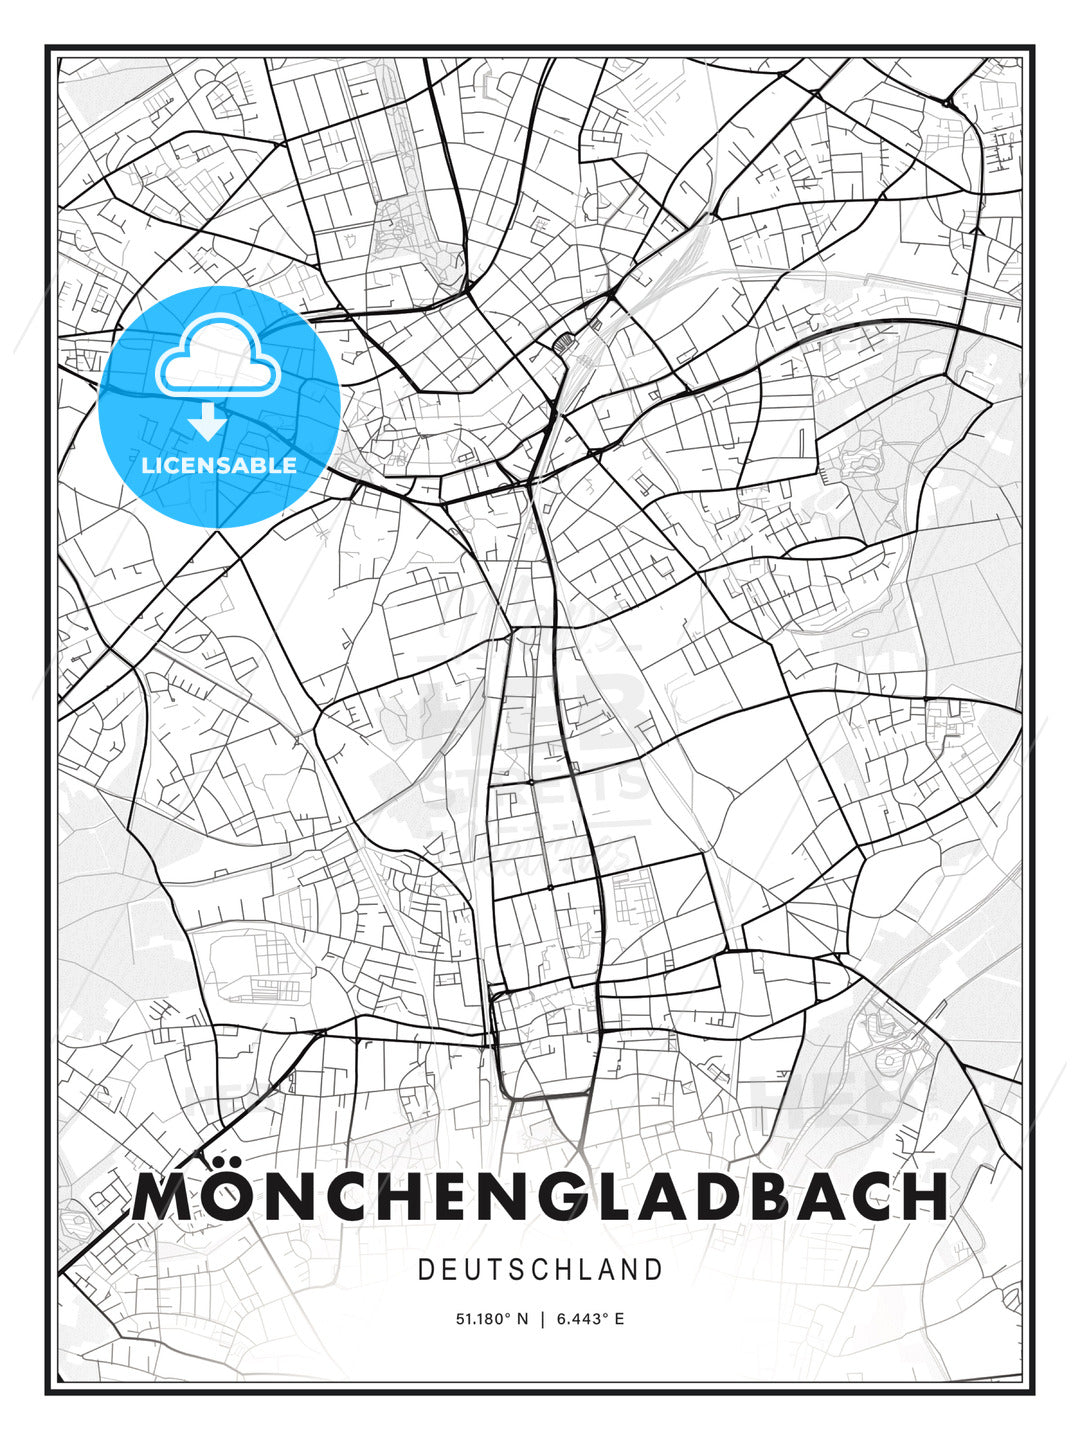 MÖNCHENGLADBACH / Monchengladbach, Germany, Modern Print Template in Various Formats - HEBSTREITS Sketches